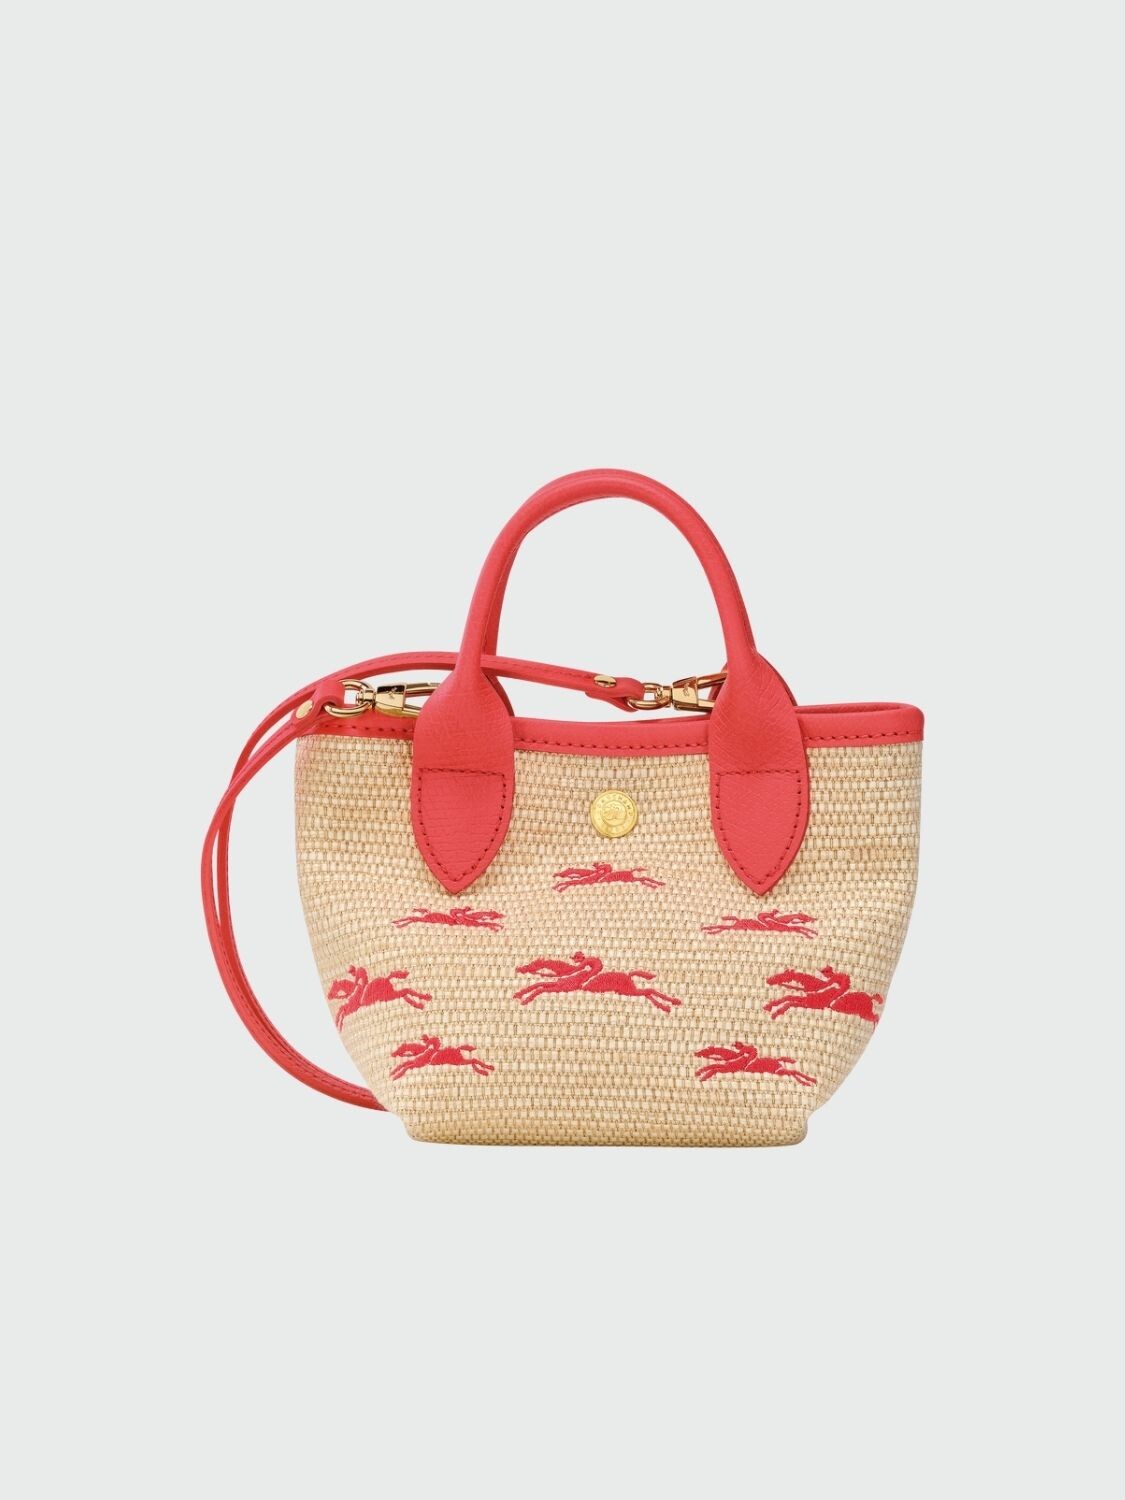 Longchamp -Cartera estilo cesta, Le panier pliage-Trotteur Rojo